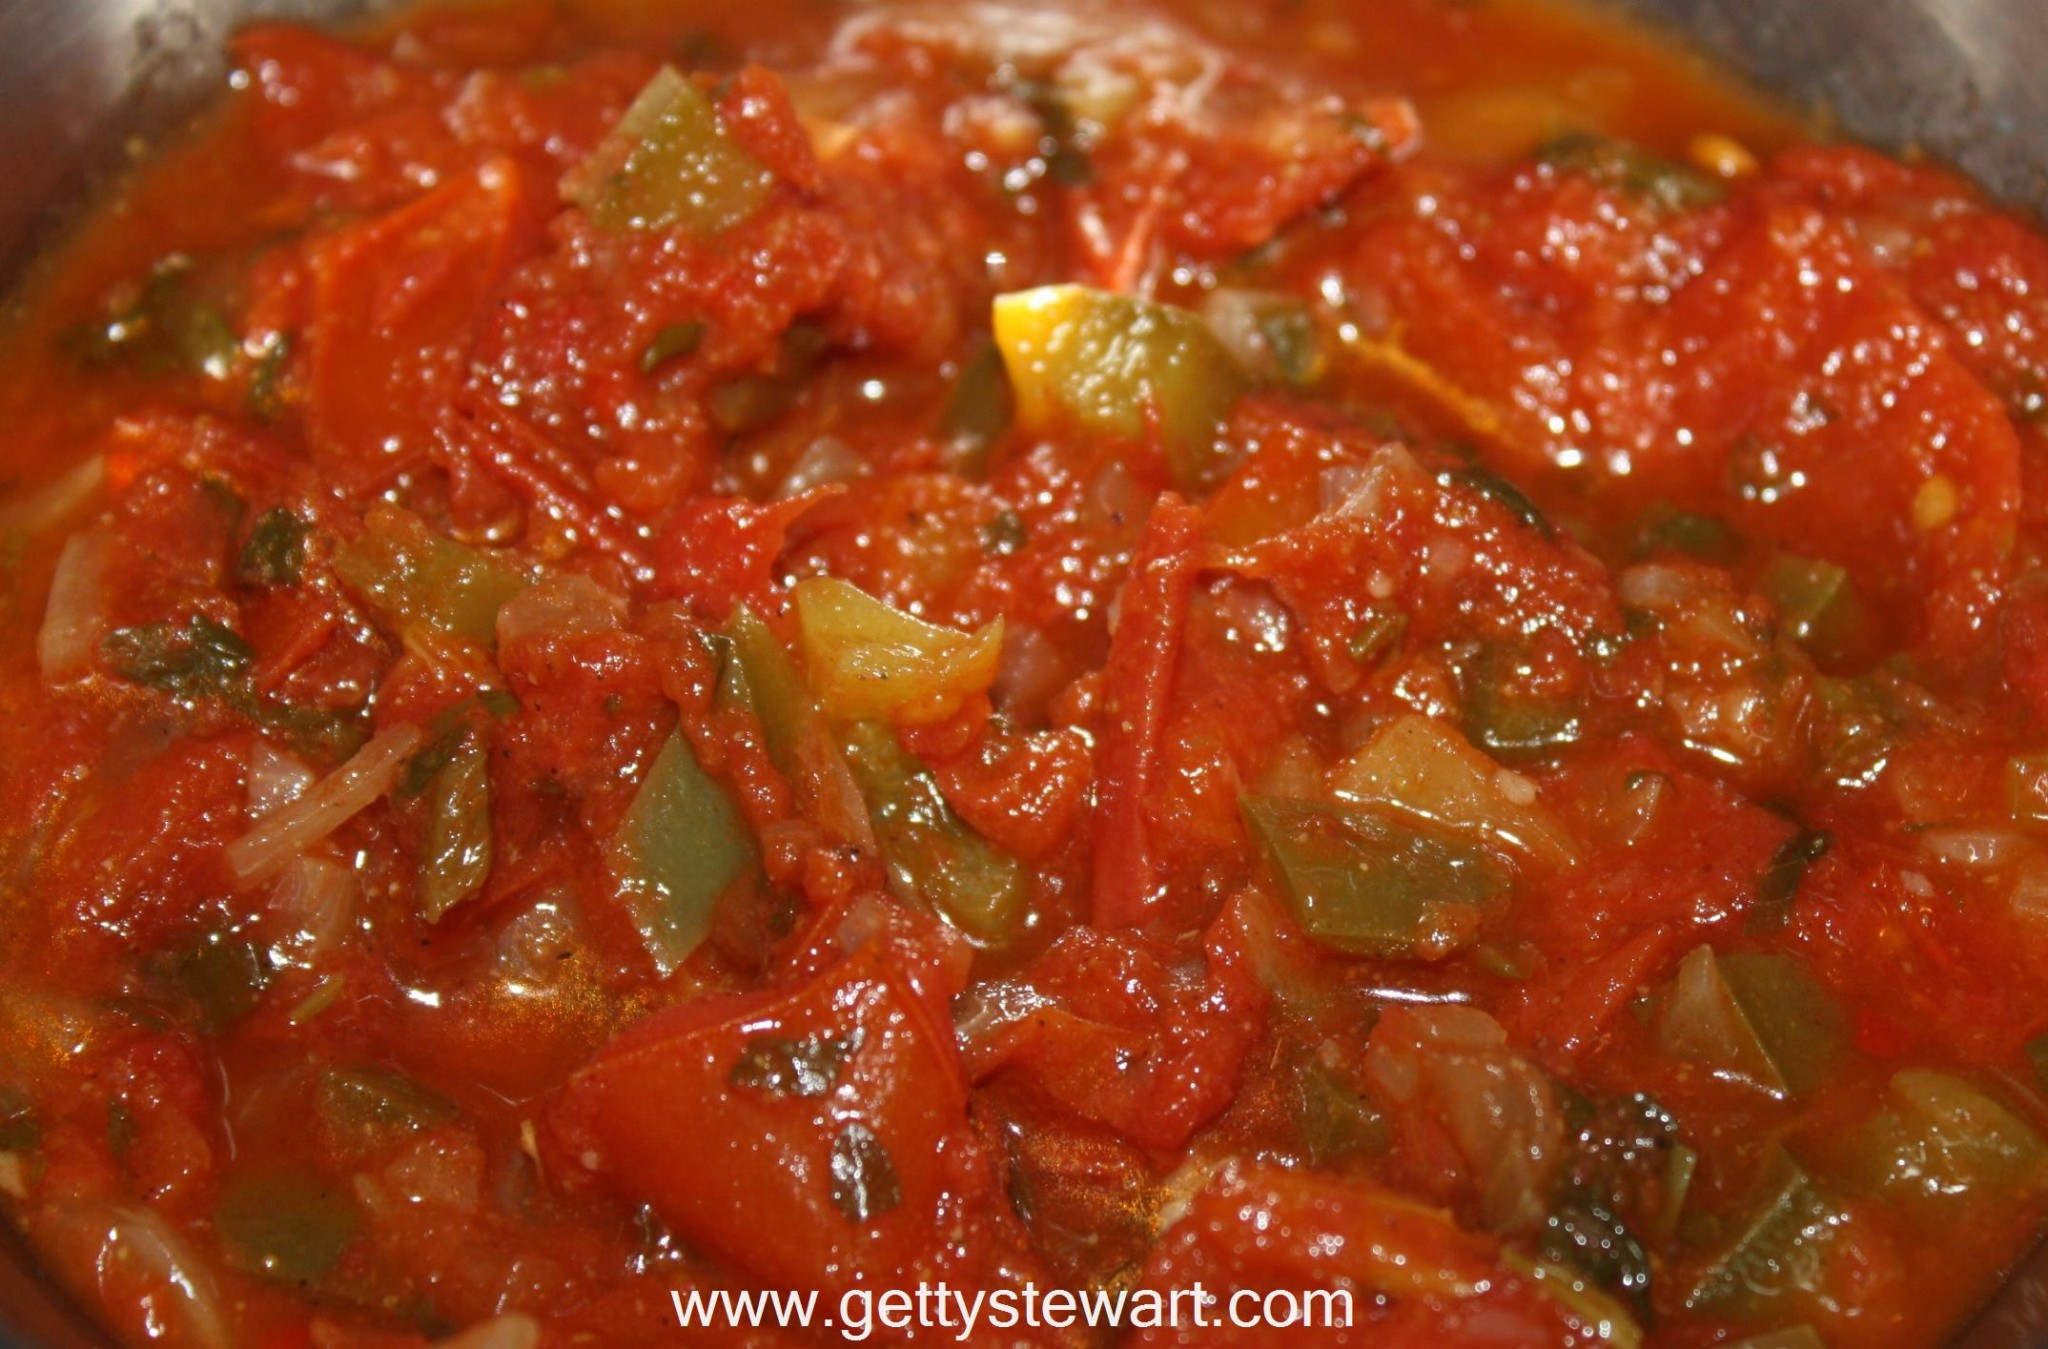 Freezer Salsa Recipe With Fresh Tomatoes
 How to Make Freezer Salsa Tomatoes Getty Stewart